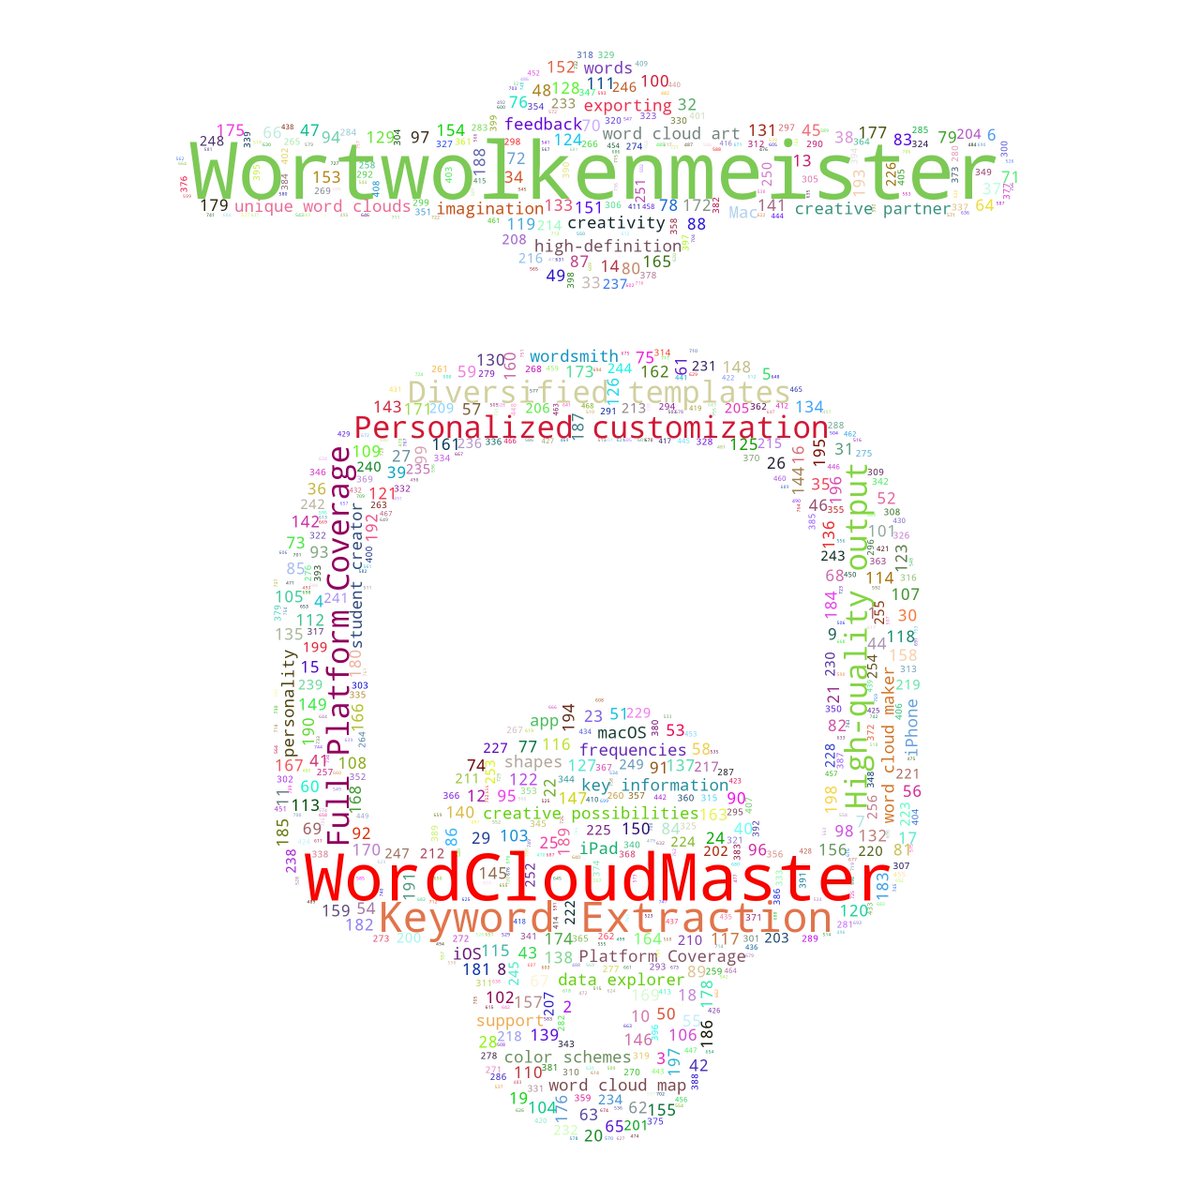 #WordCloudMaster #wordcloud #mounted #tagcloud #詞雲圖 #Wortwolkendiagramm #词云图 #标签云 #文字云 #Wortwolkendiagramm #nube_de_palabras #Maestro_de_la_nube_de_palabras #iphone #mac #Apple #iPad #ワードクラウドマスター #ワードクラウドマップ

 👉 studio.wordcloudmaster.com 🎉